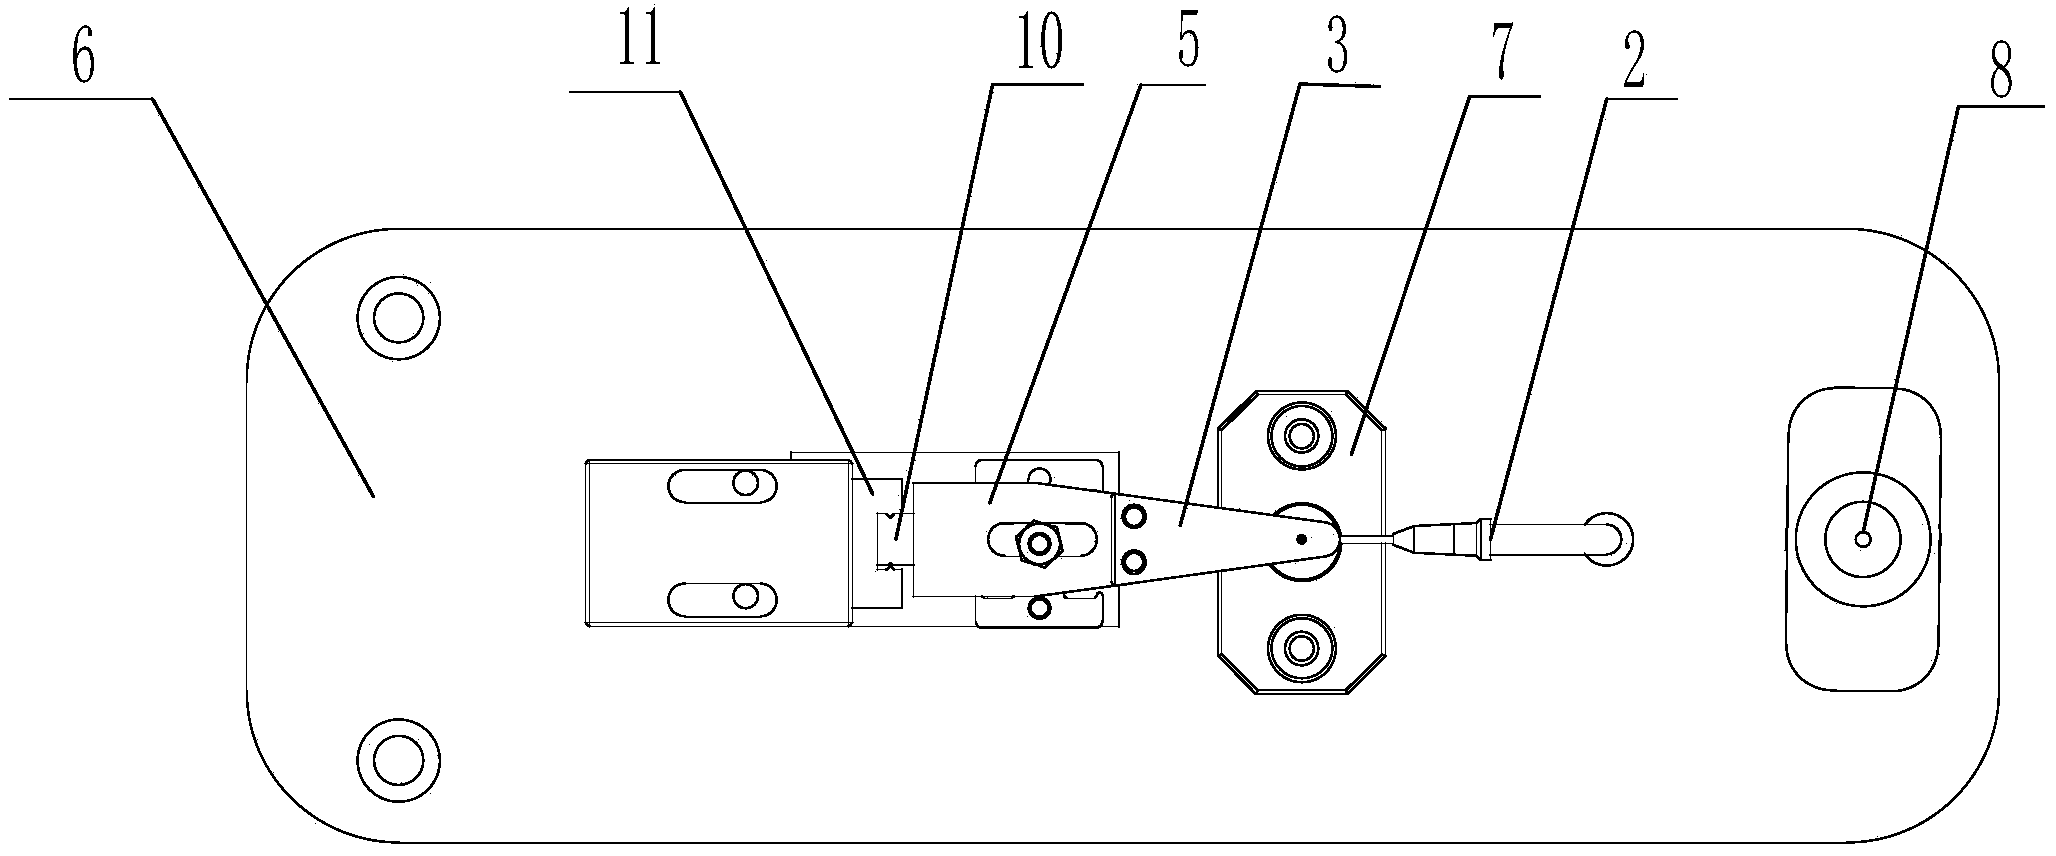 Automatic glue dispensing mechanism